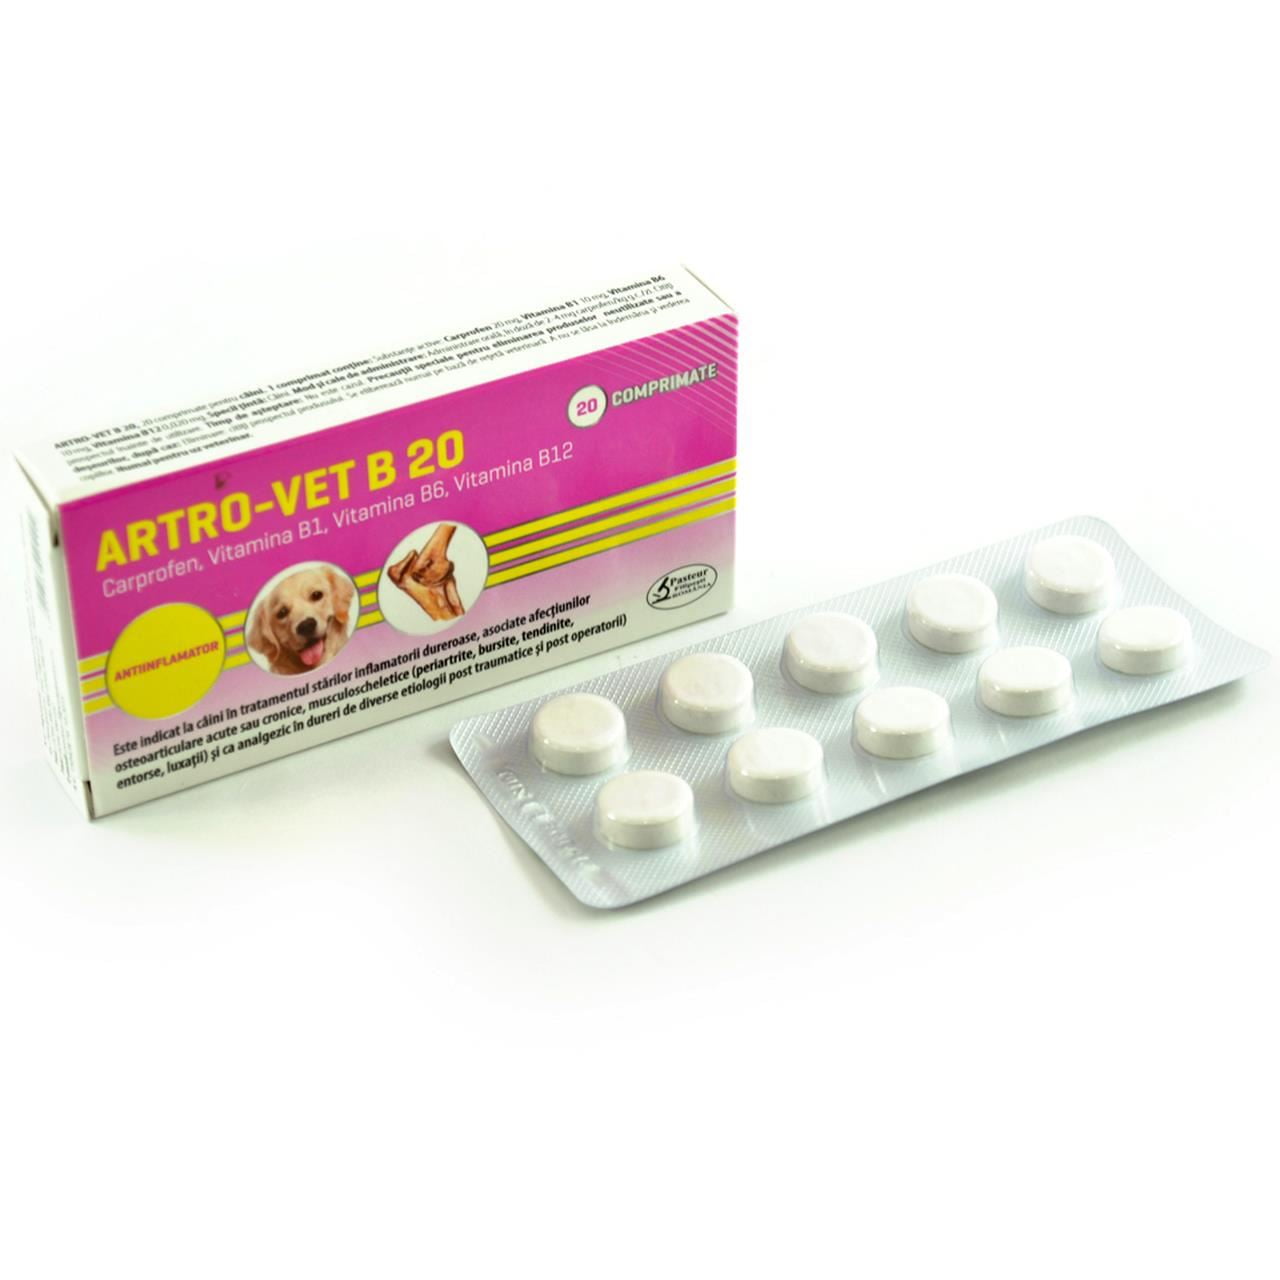 Antiinflamator pentru caini artro-vet b 20 2x10cp